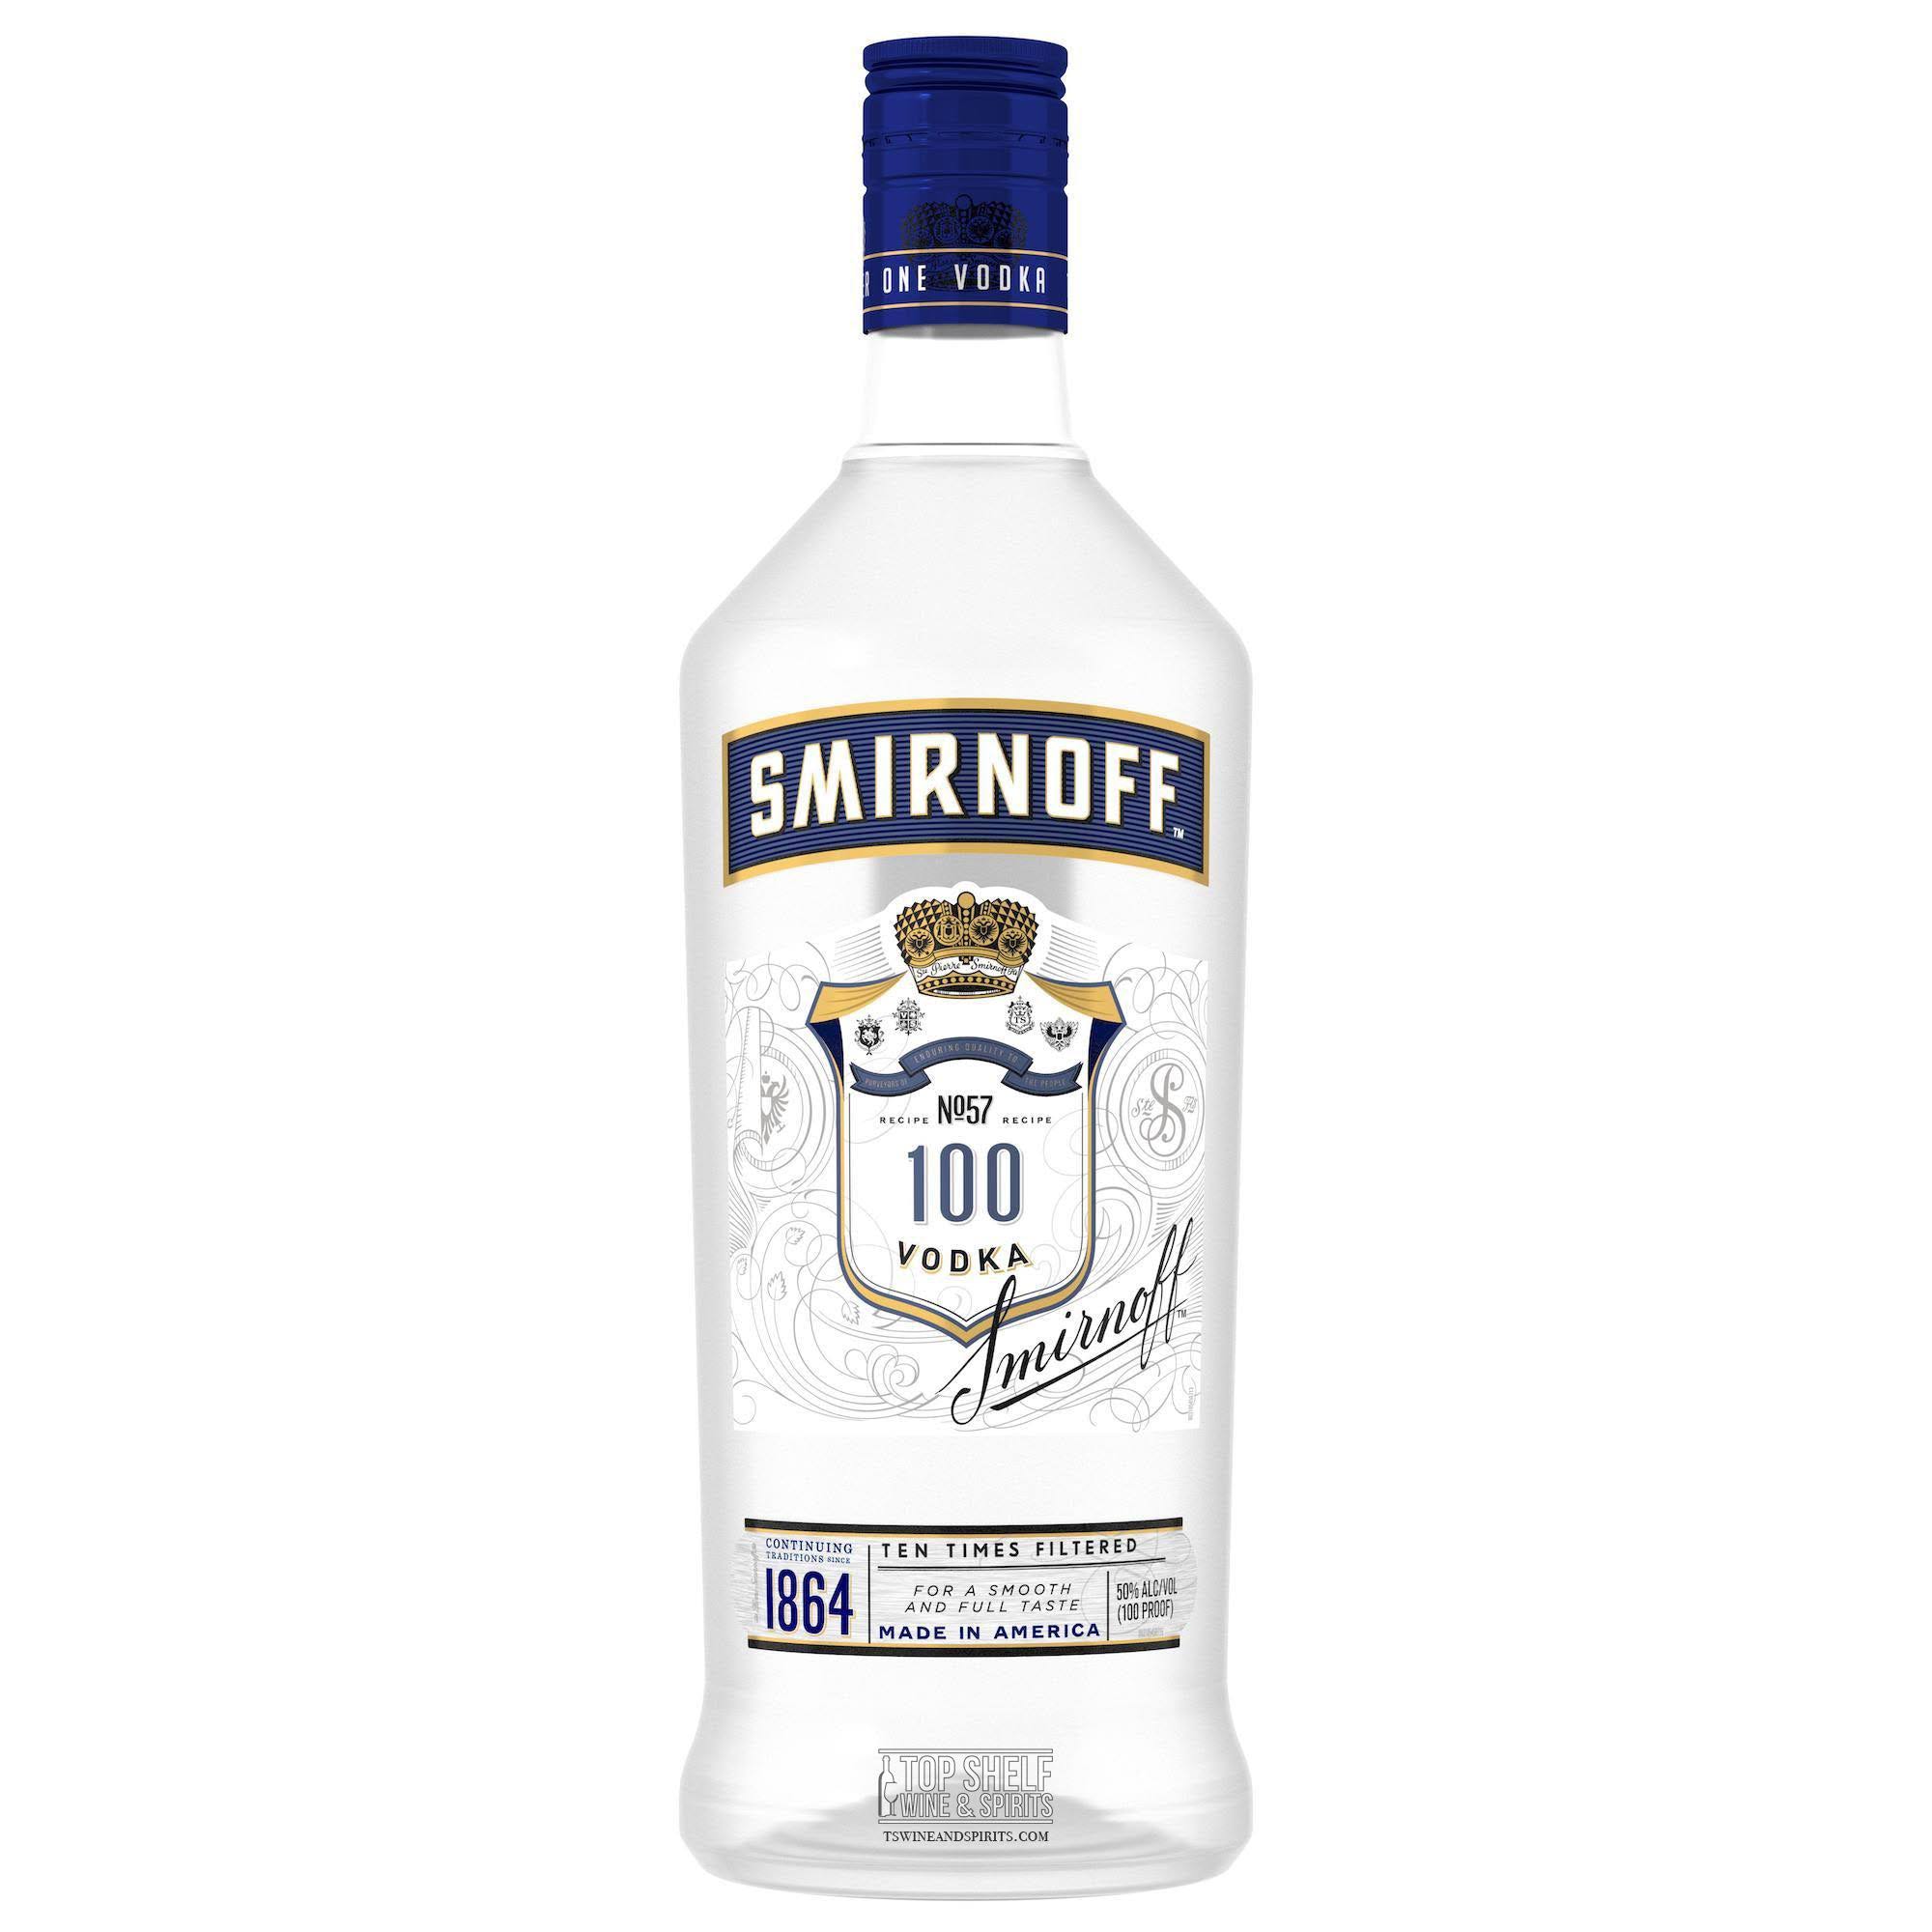 Smirnoff Vodka, Triple Distilled, 100 Proof - 1.75 lt